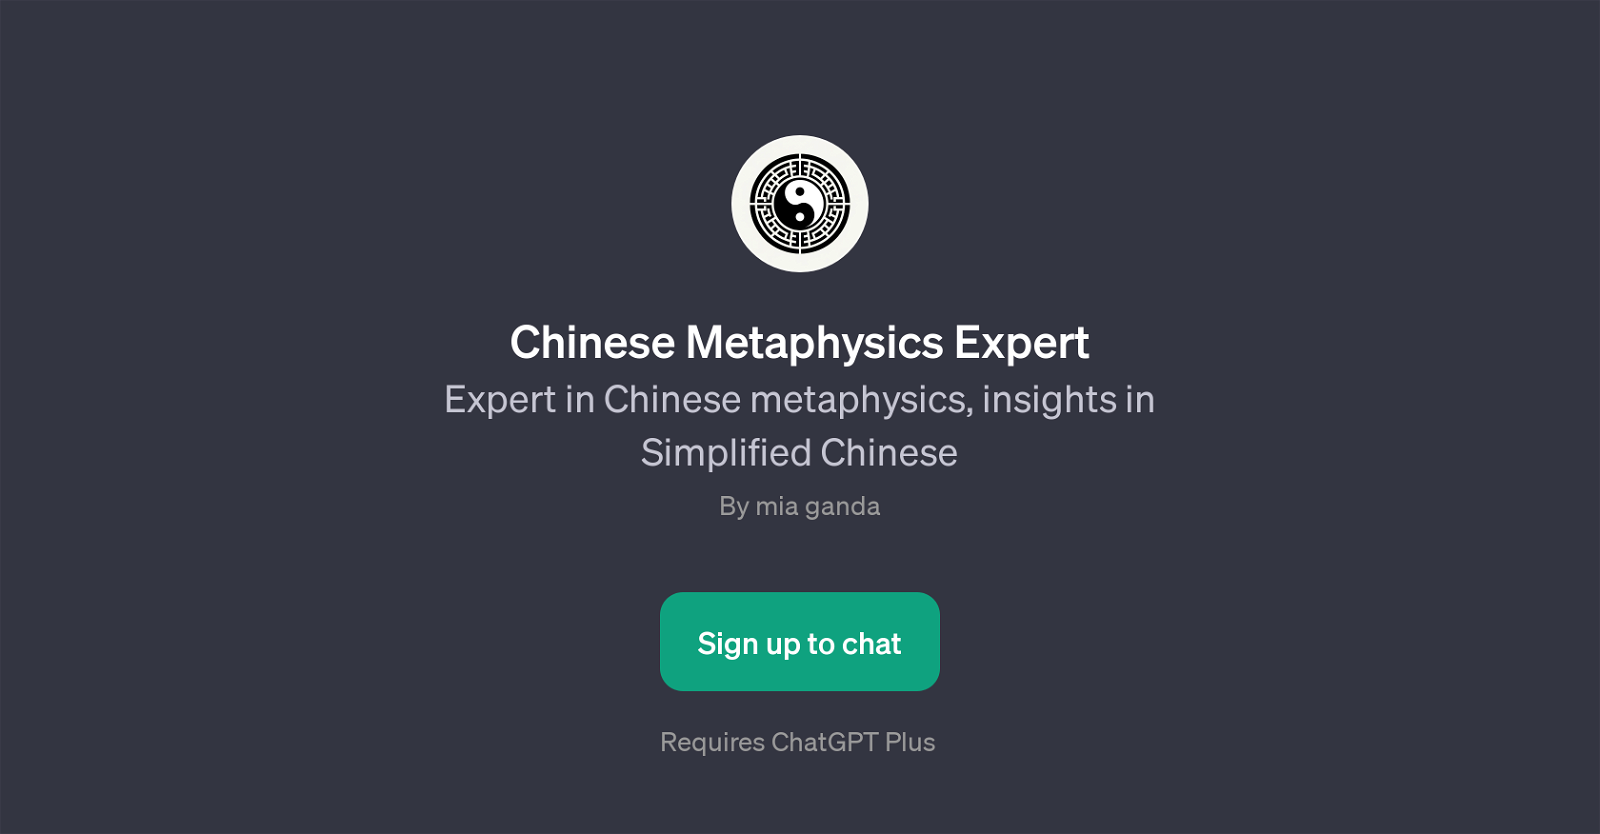 Chinese Metaphysics Expert website